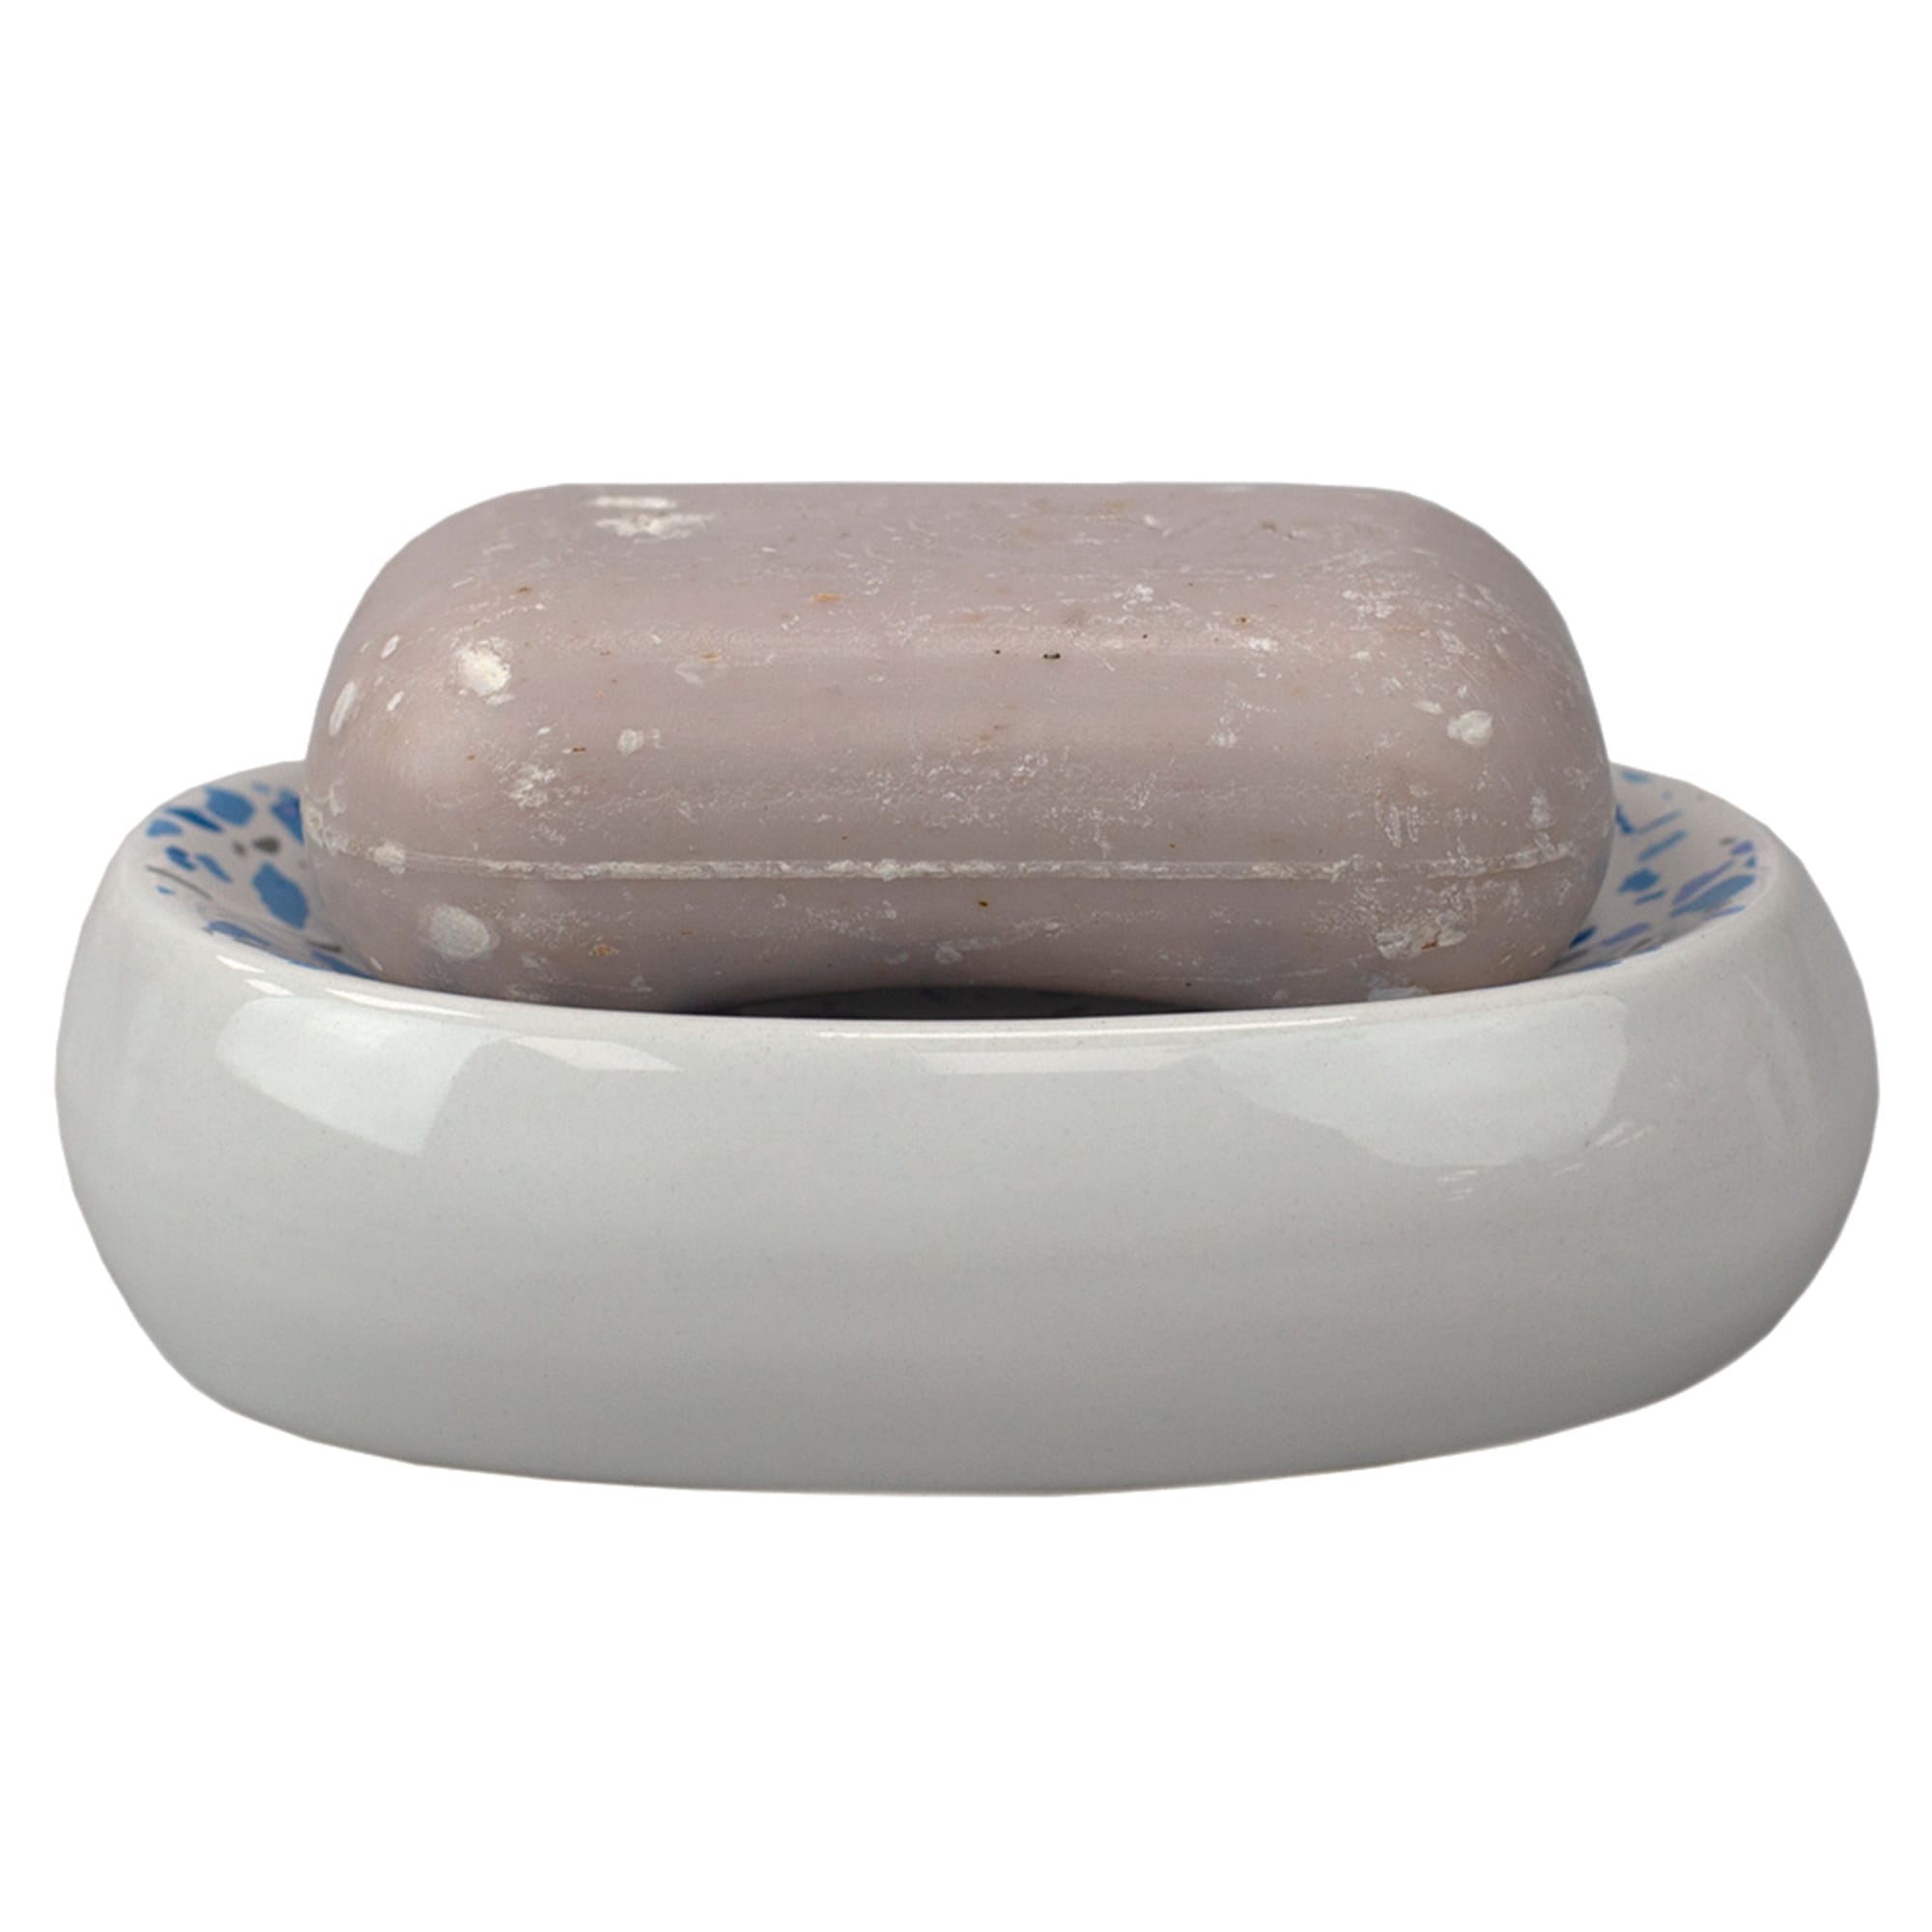 Home Basics Trendy Terrazzo 4 Piece Ceramic Bath Accessory Set, Blue $10.00 EACH, CASE PACK OF 12